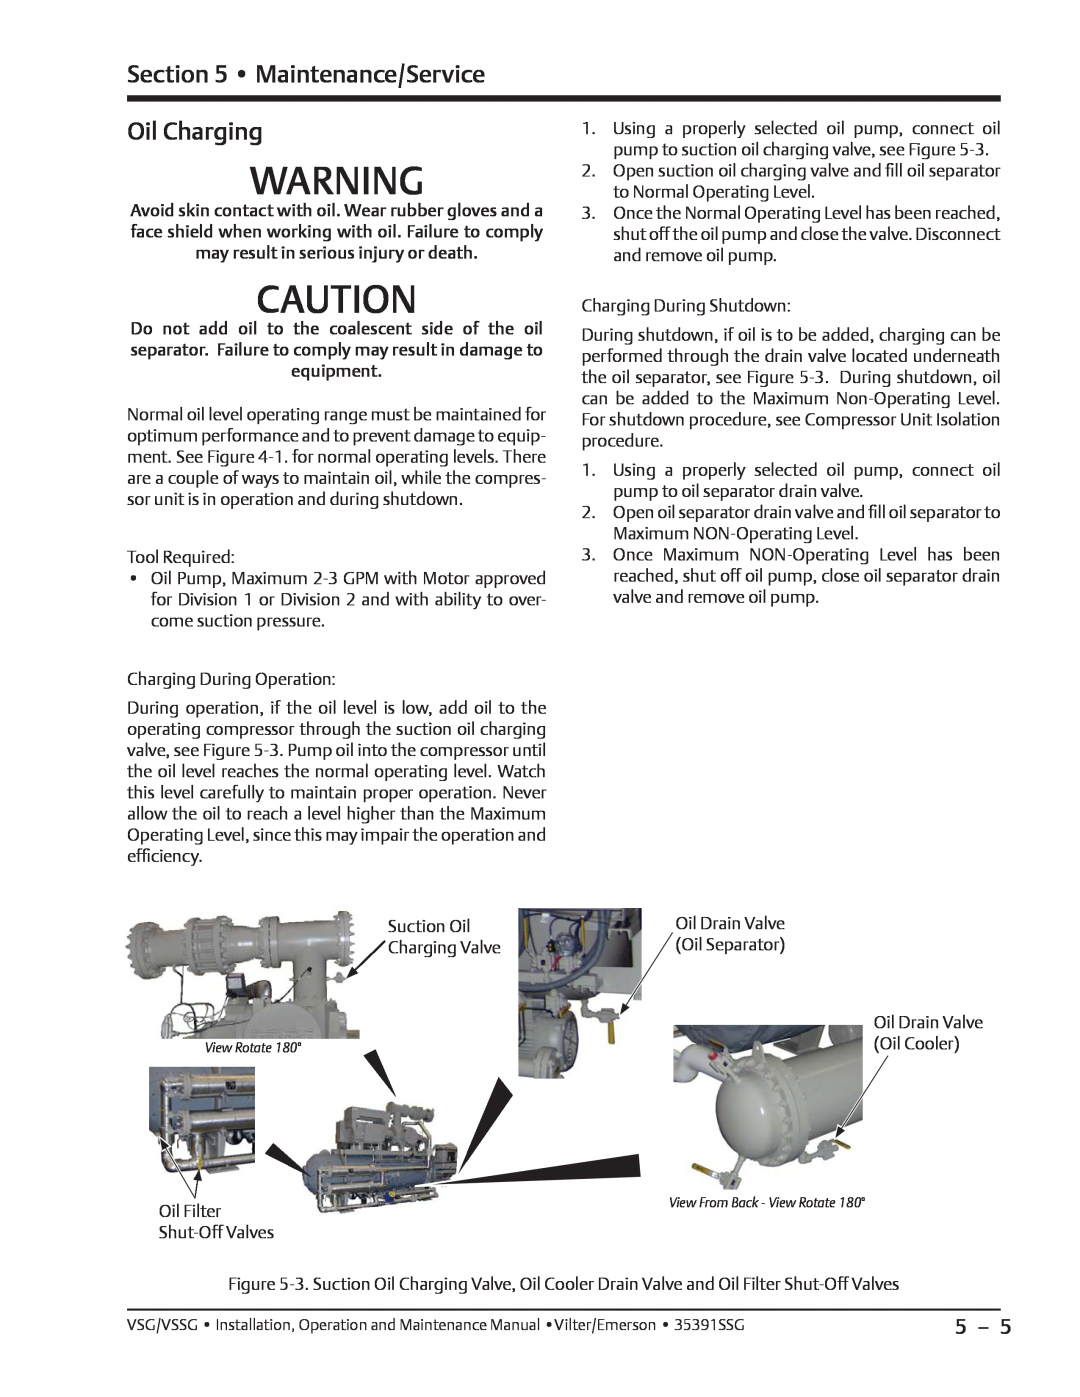 Emerson VSG, VSSG manual Oil Charging, Maintenance/Service 